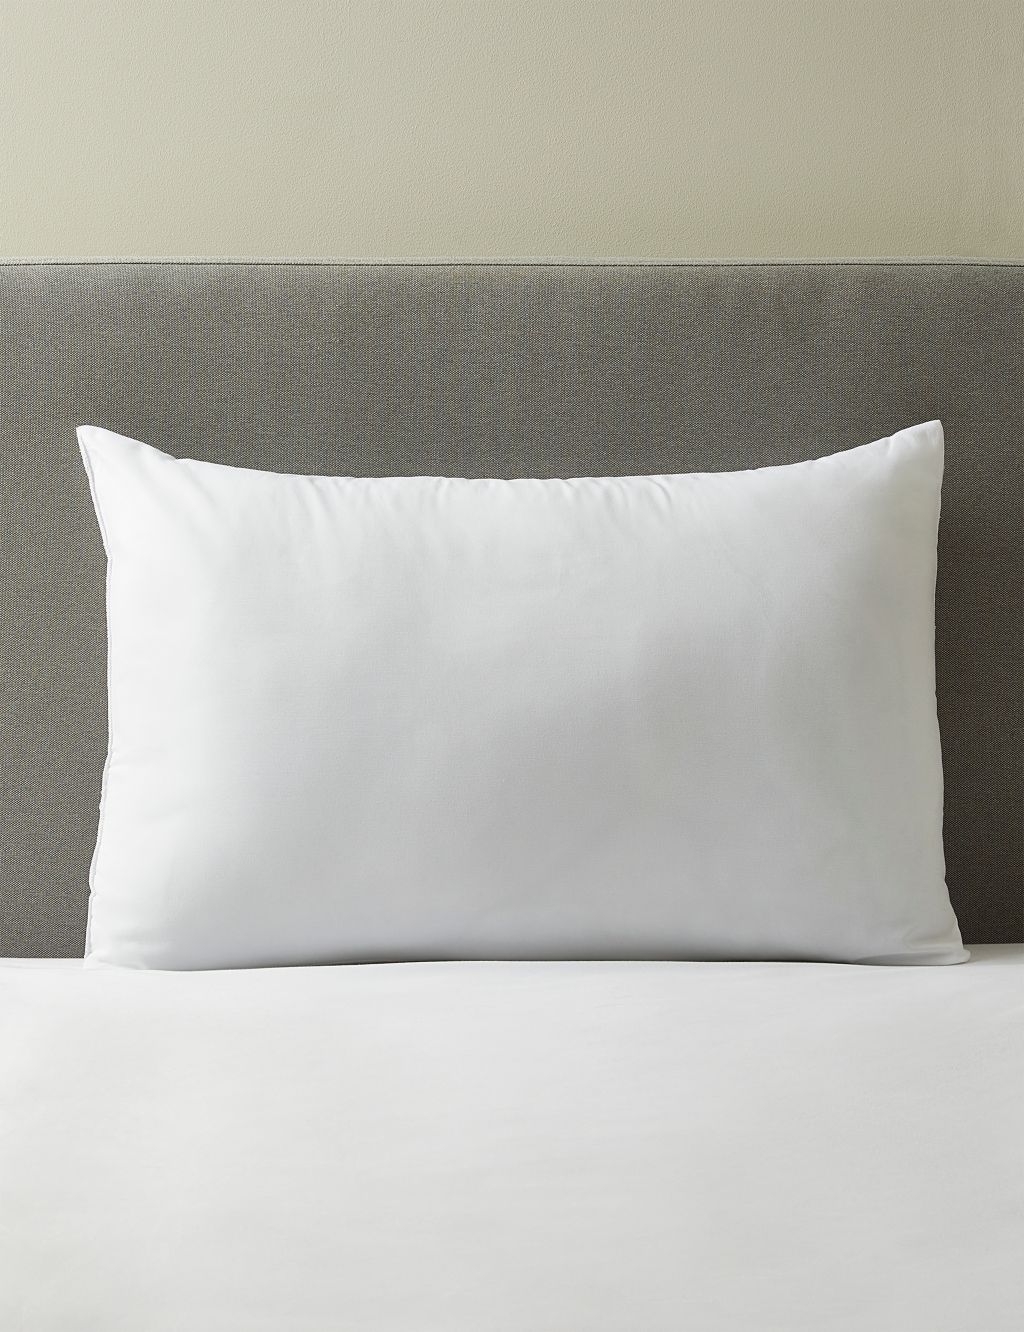 2pk Simply Soft Medium Pillows image 4